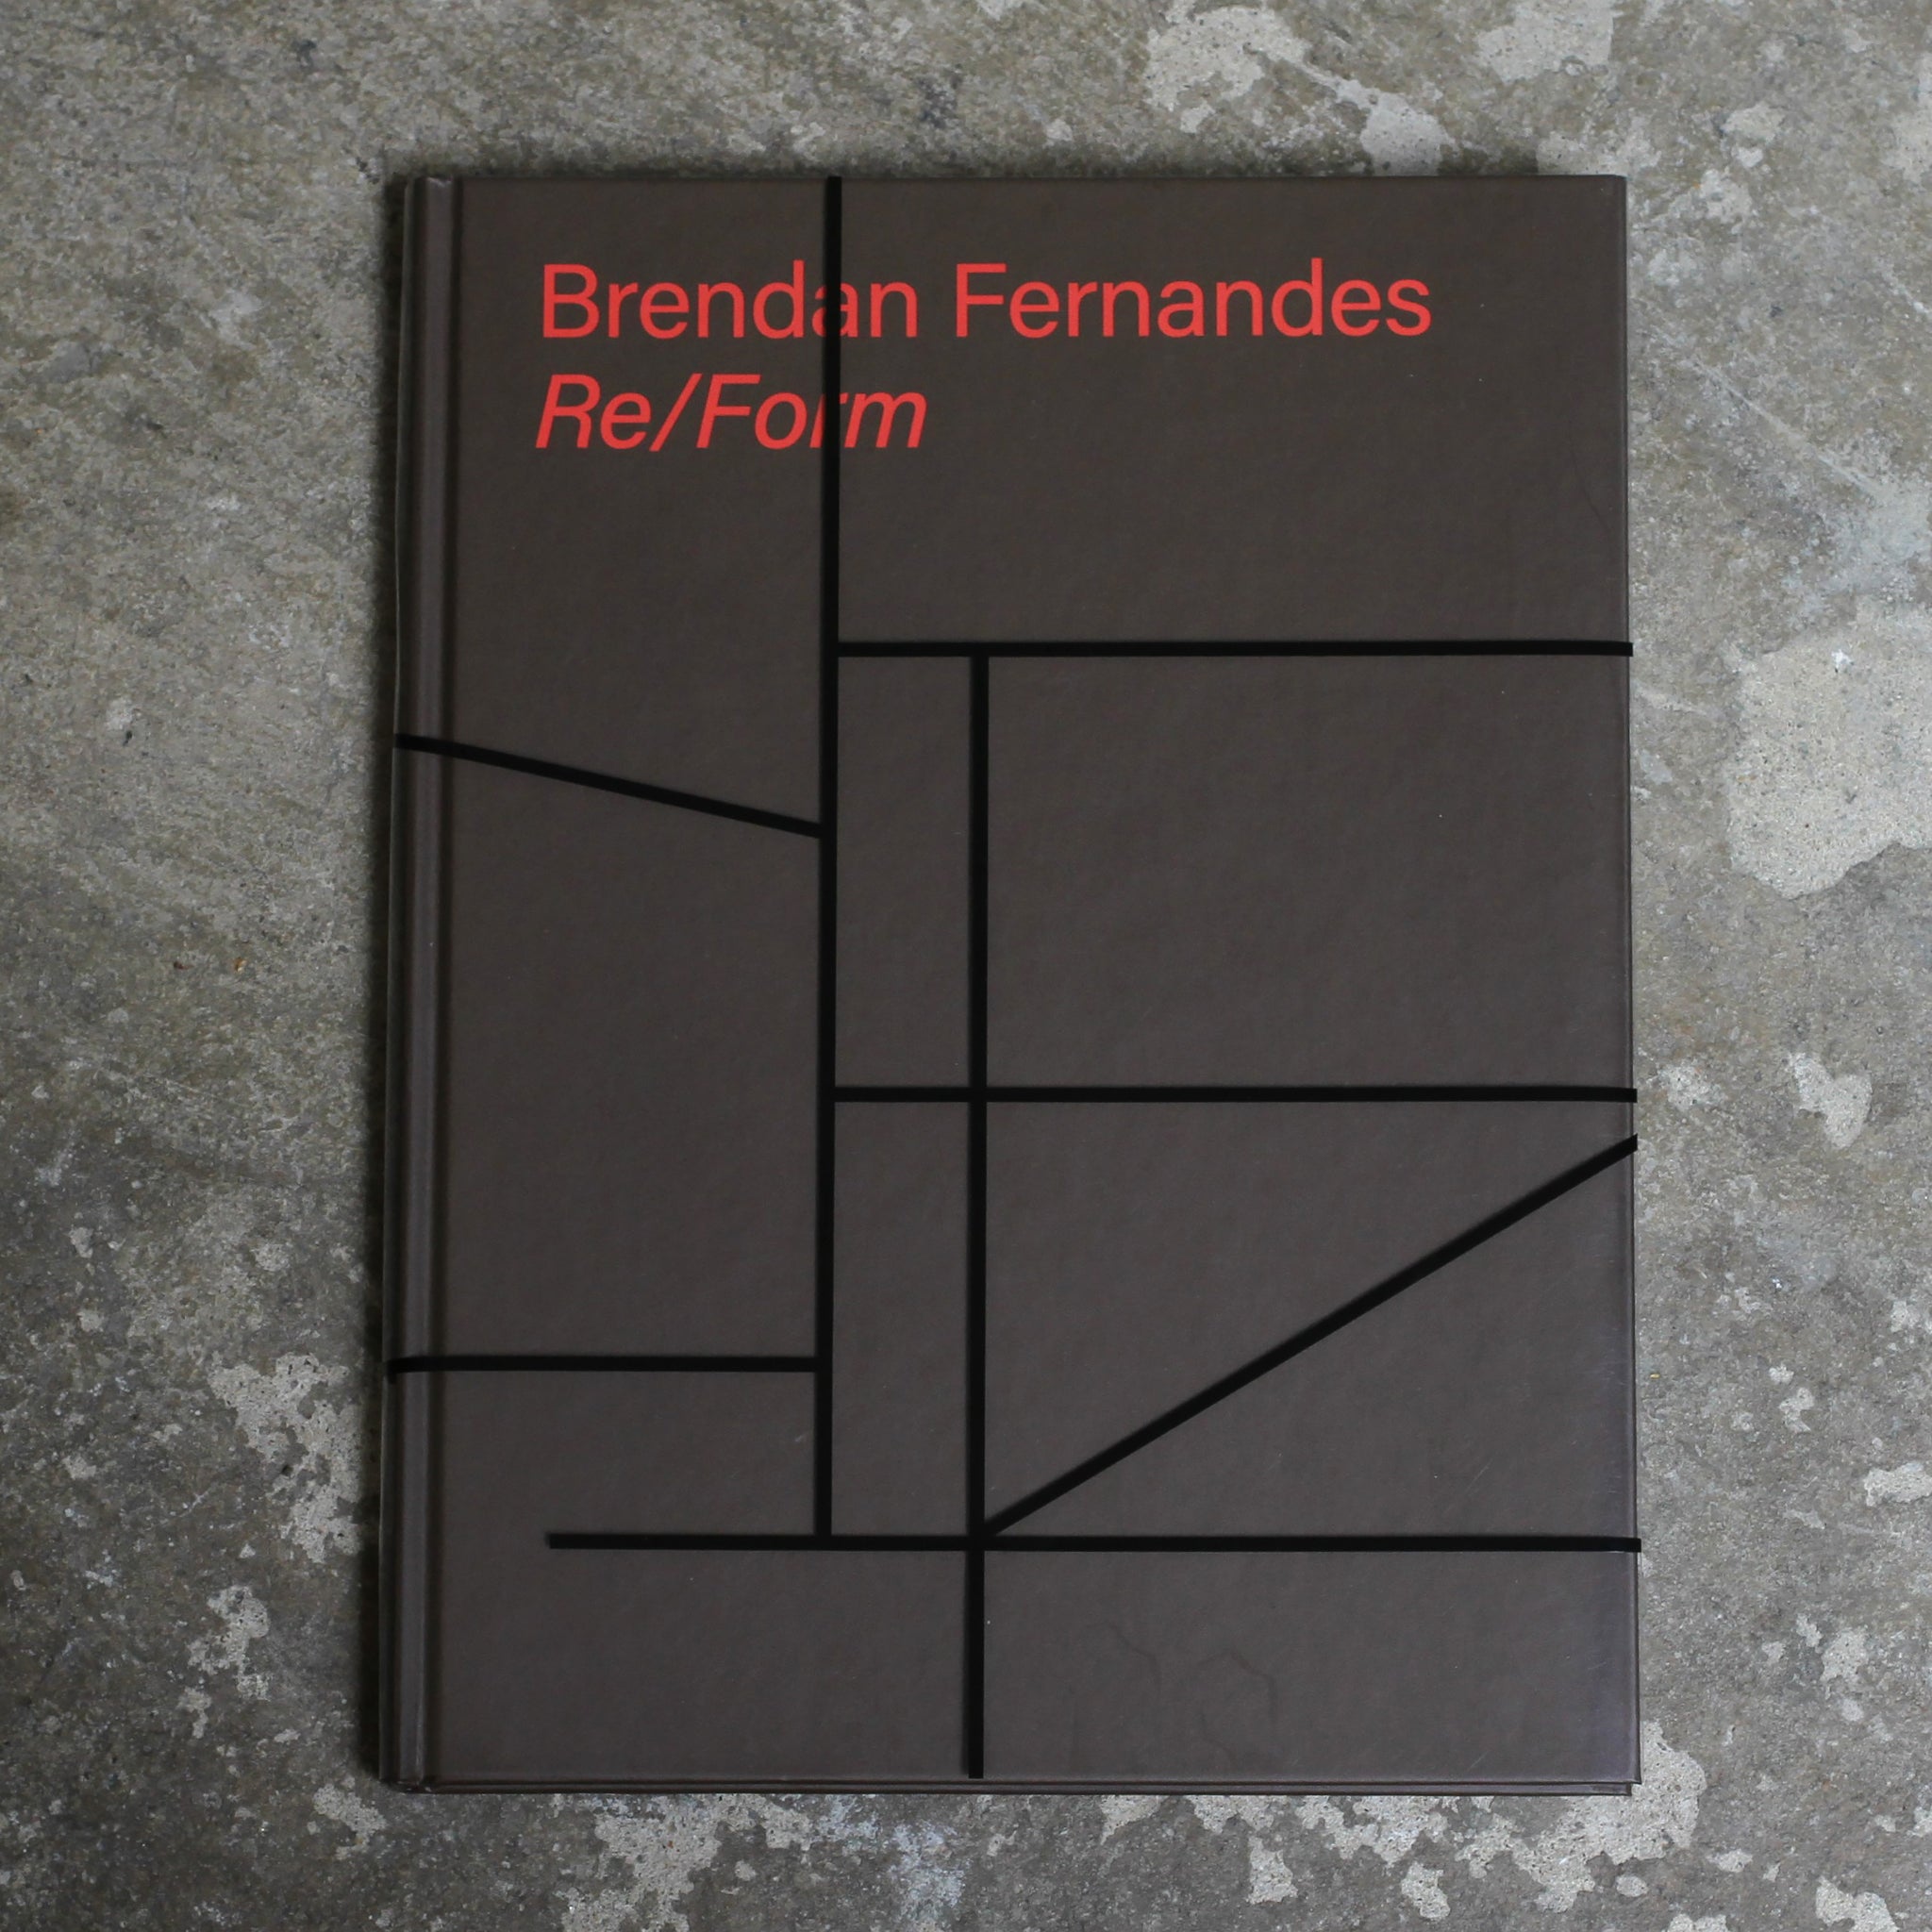 Brendan Fernandes, Re/Form book cover